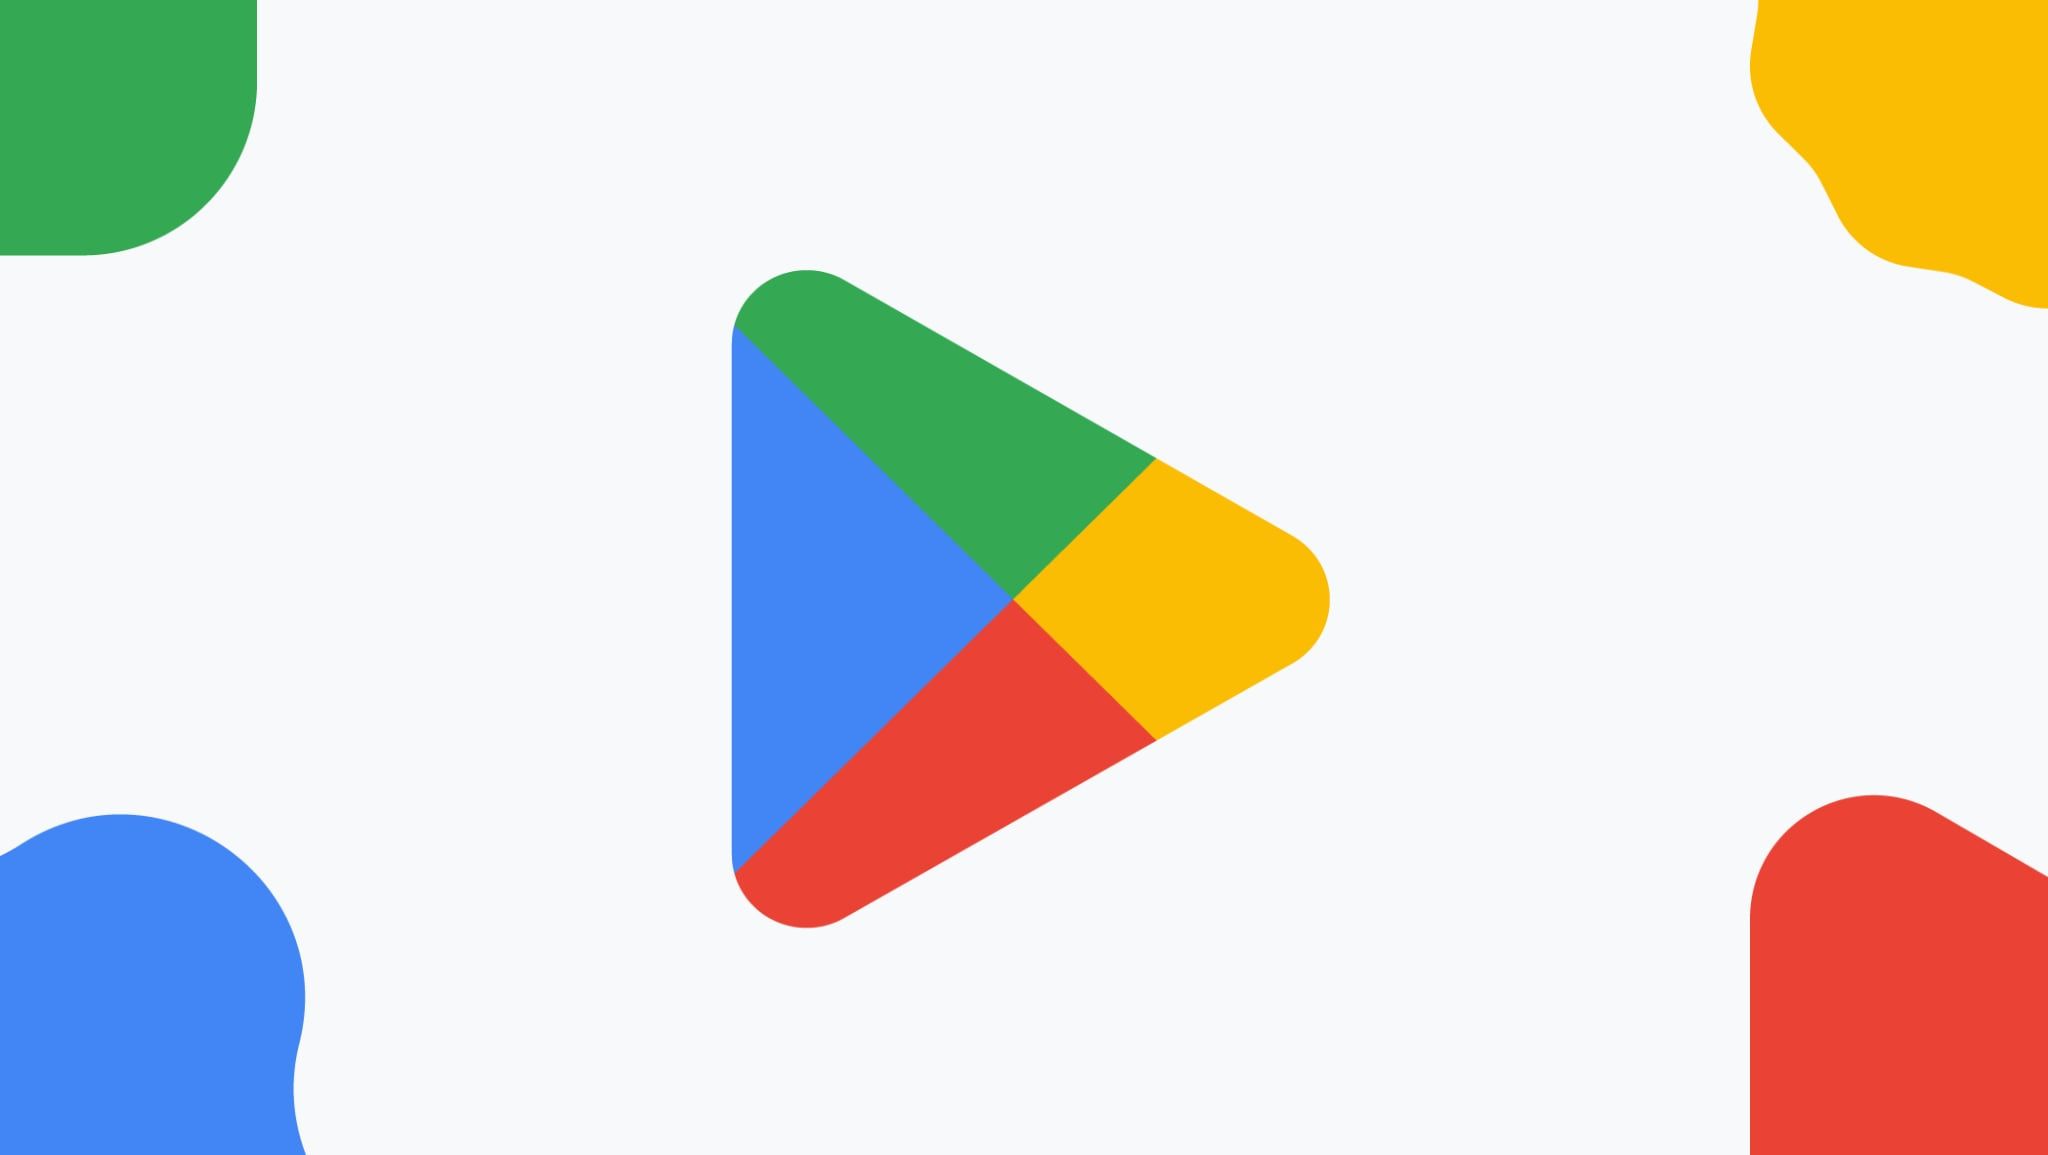 Loja Google Play Store - Como Baixar Play Store Grátis